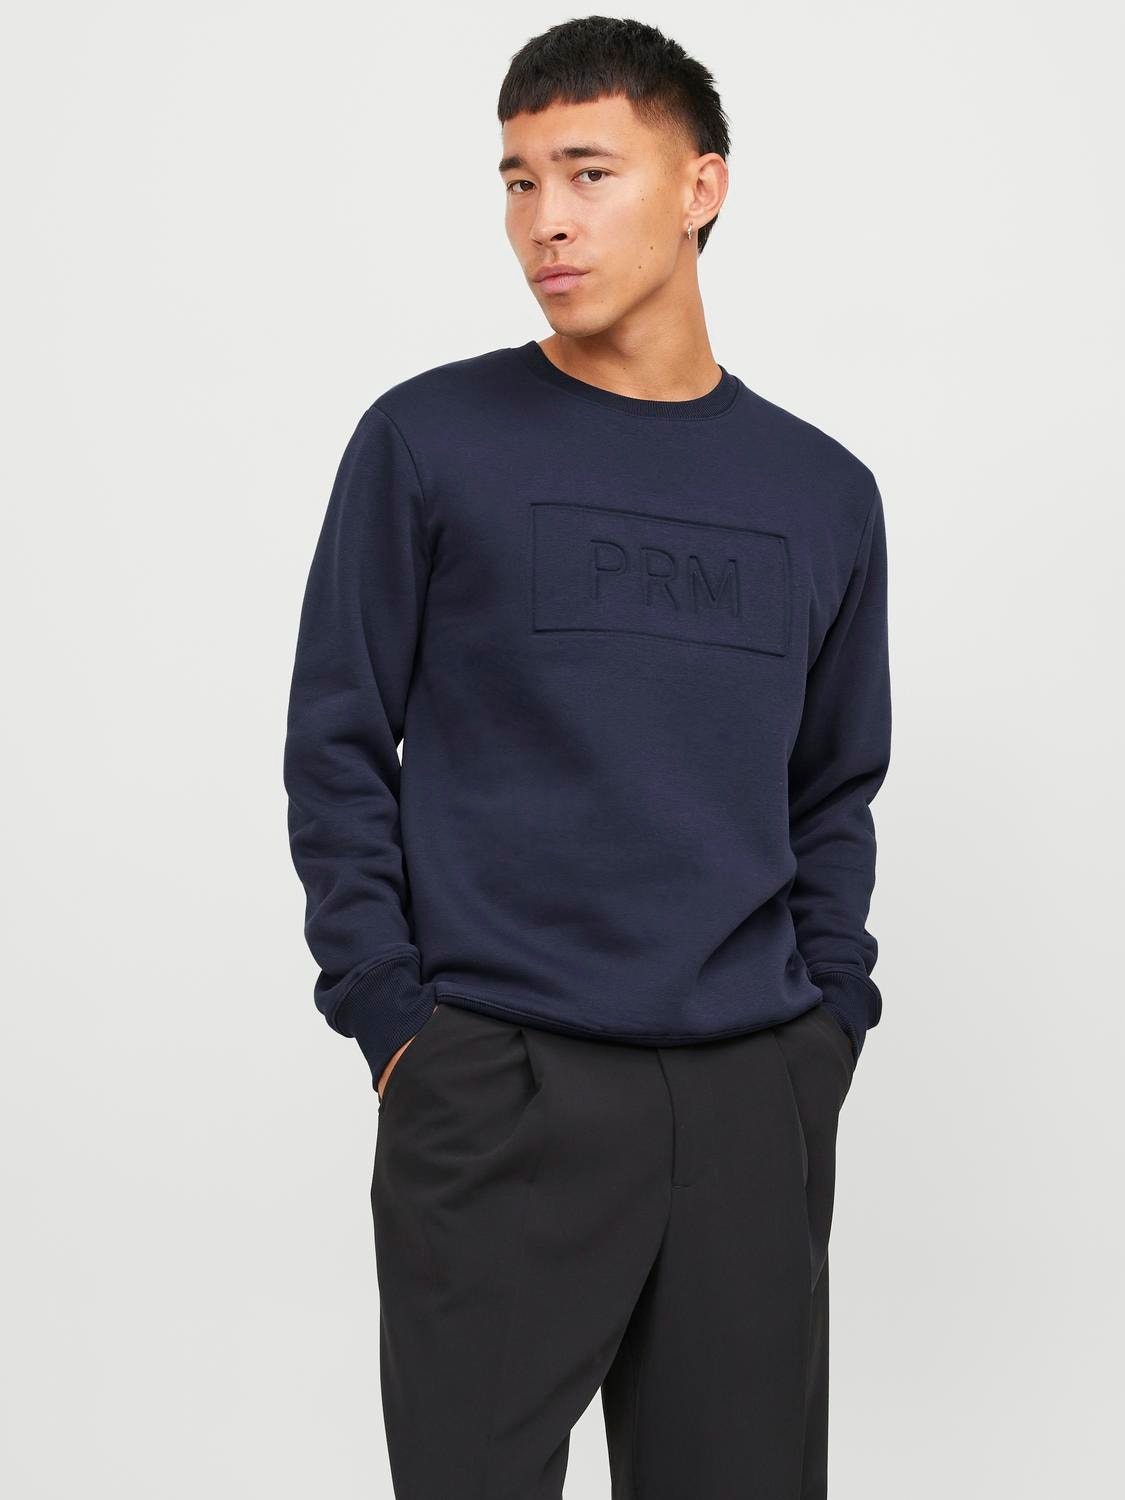 Jack & Jones Printed Crewn Neck Sweatshirt -Perfect Navy - 12241106